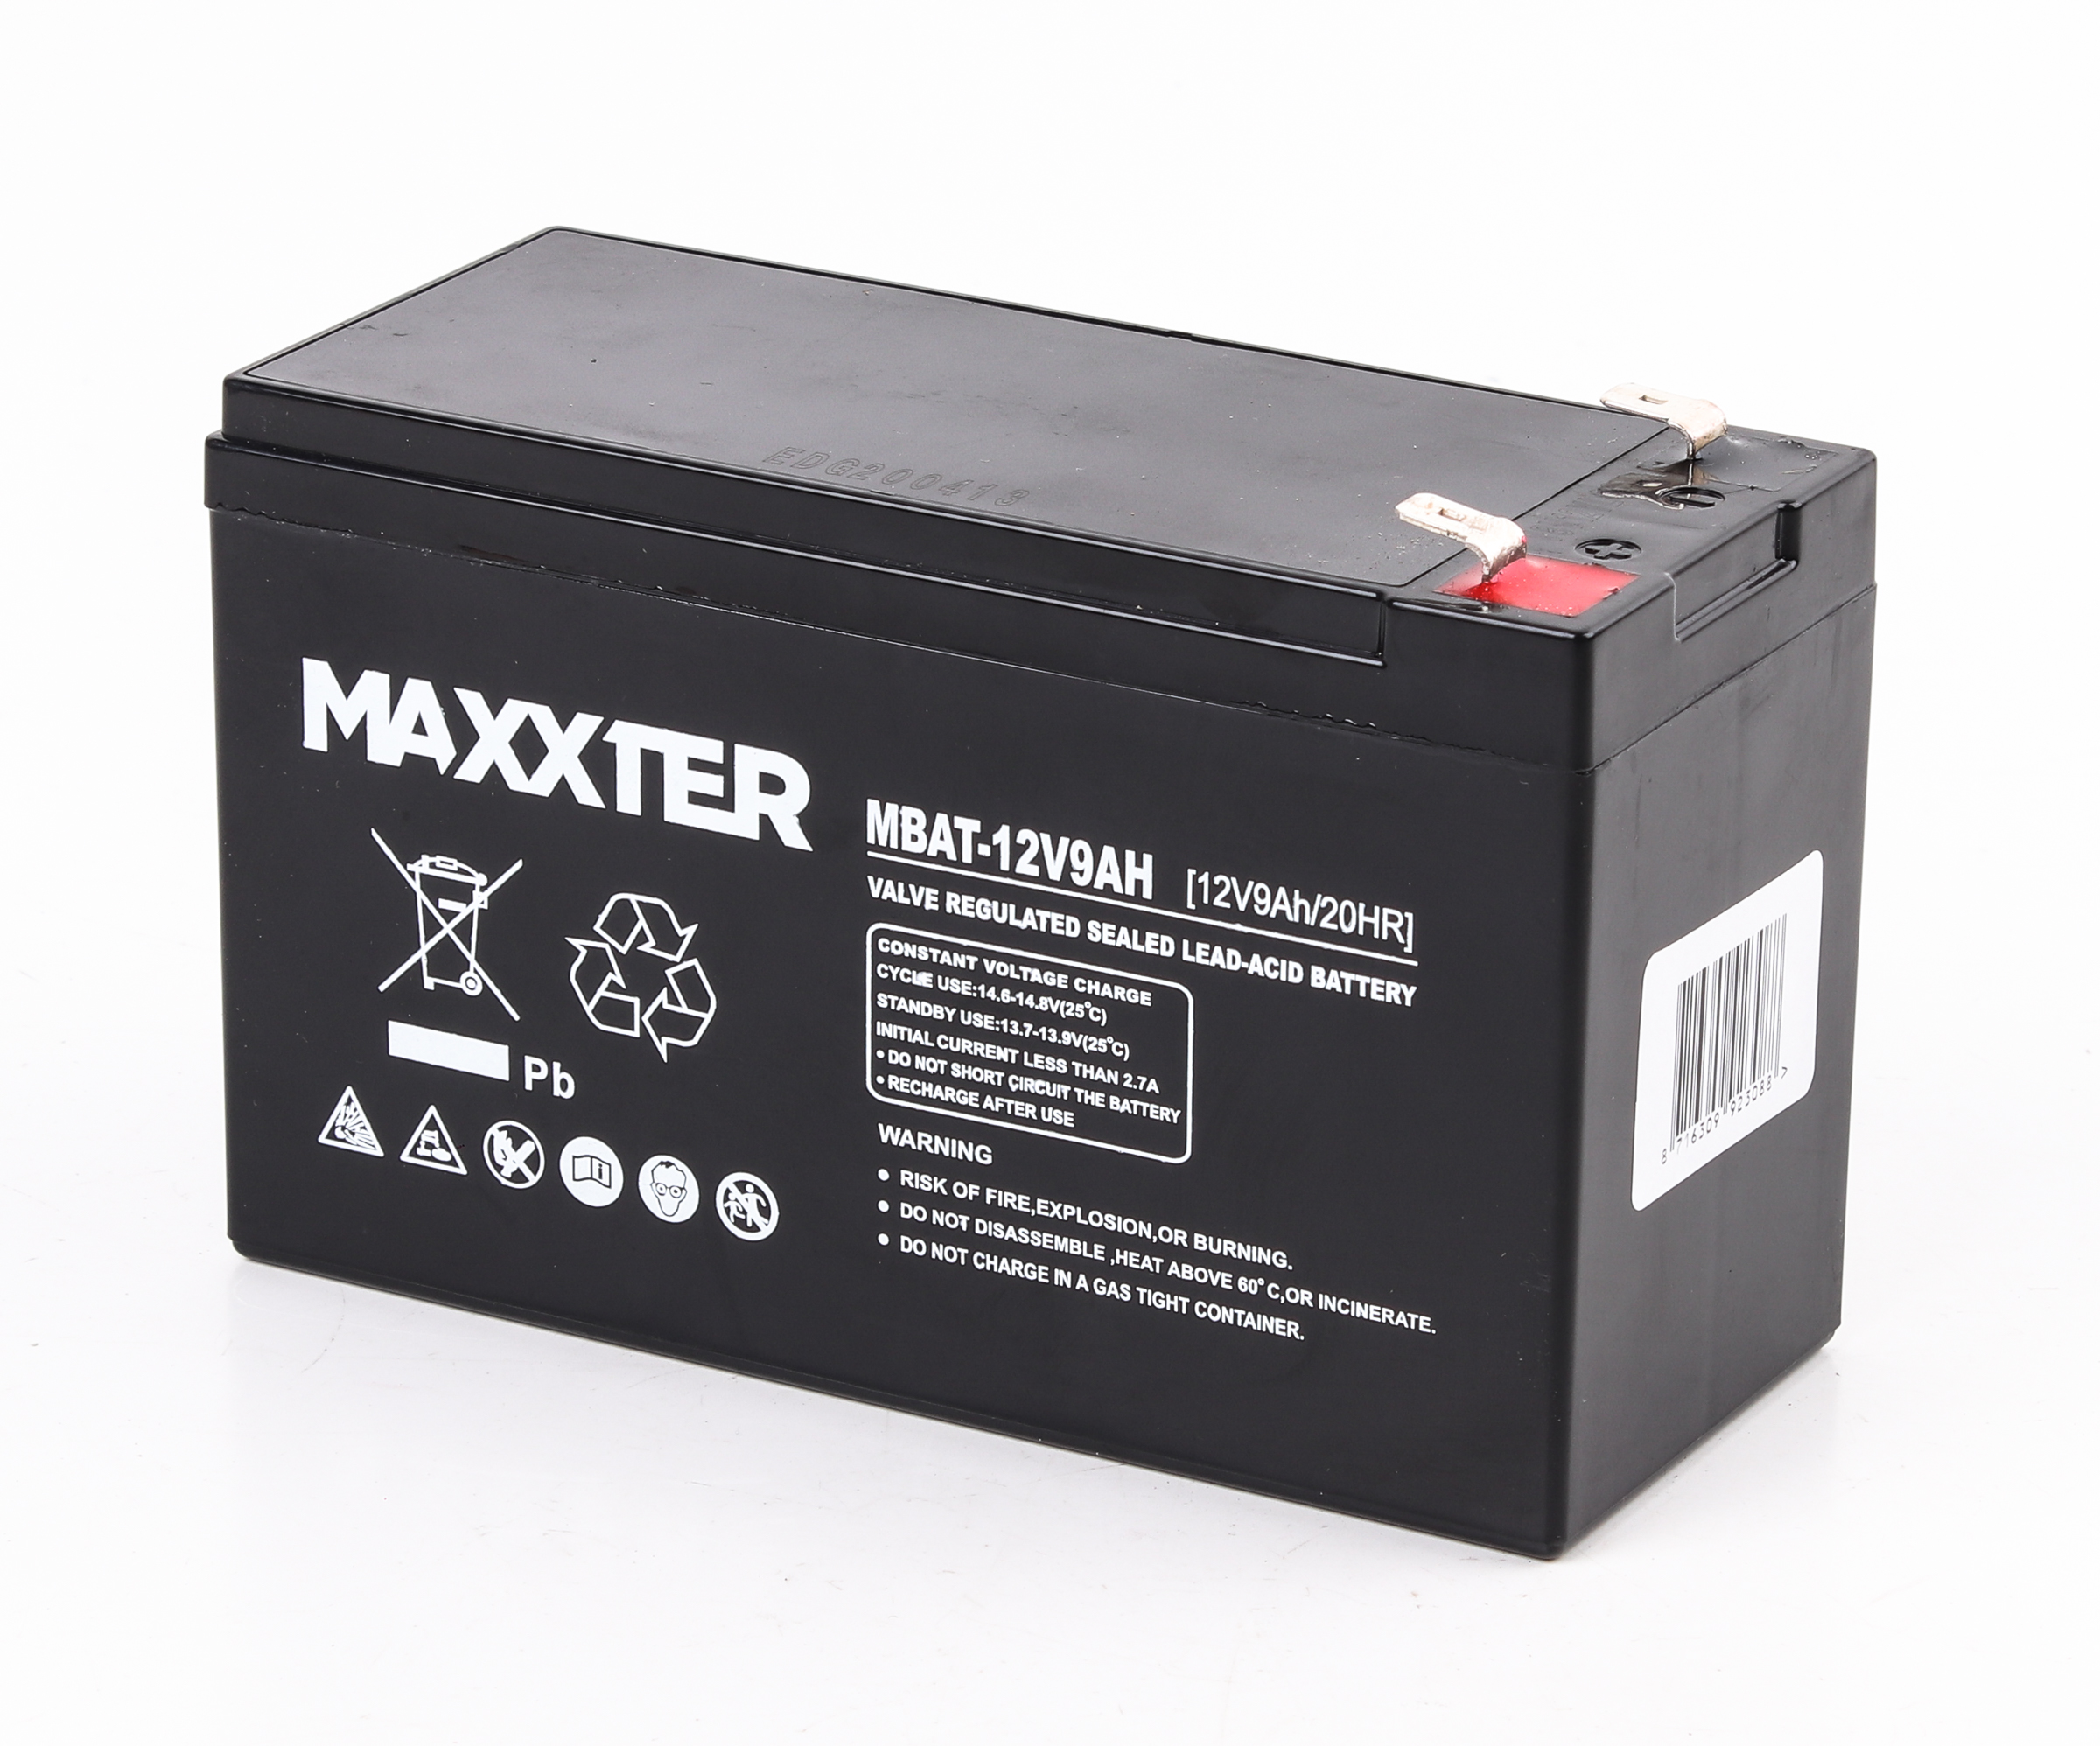 Характеристики аккумулятор Maxxter MBAT-12V9AH